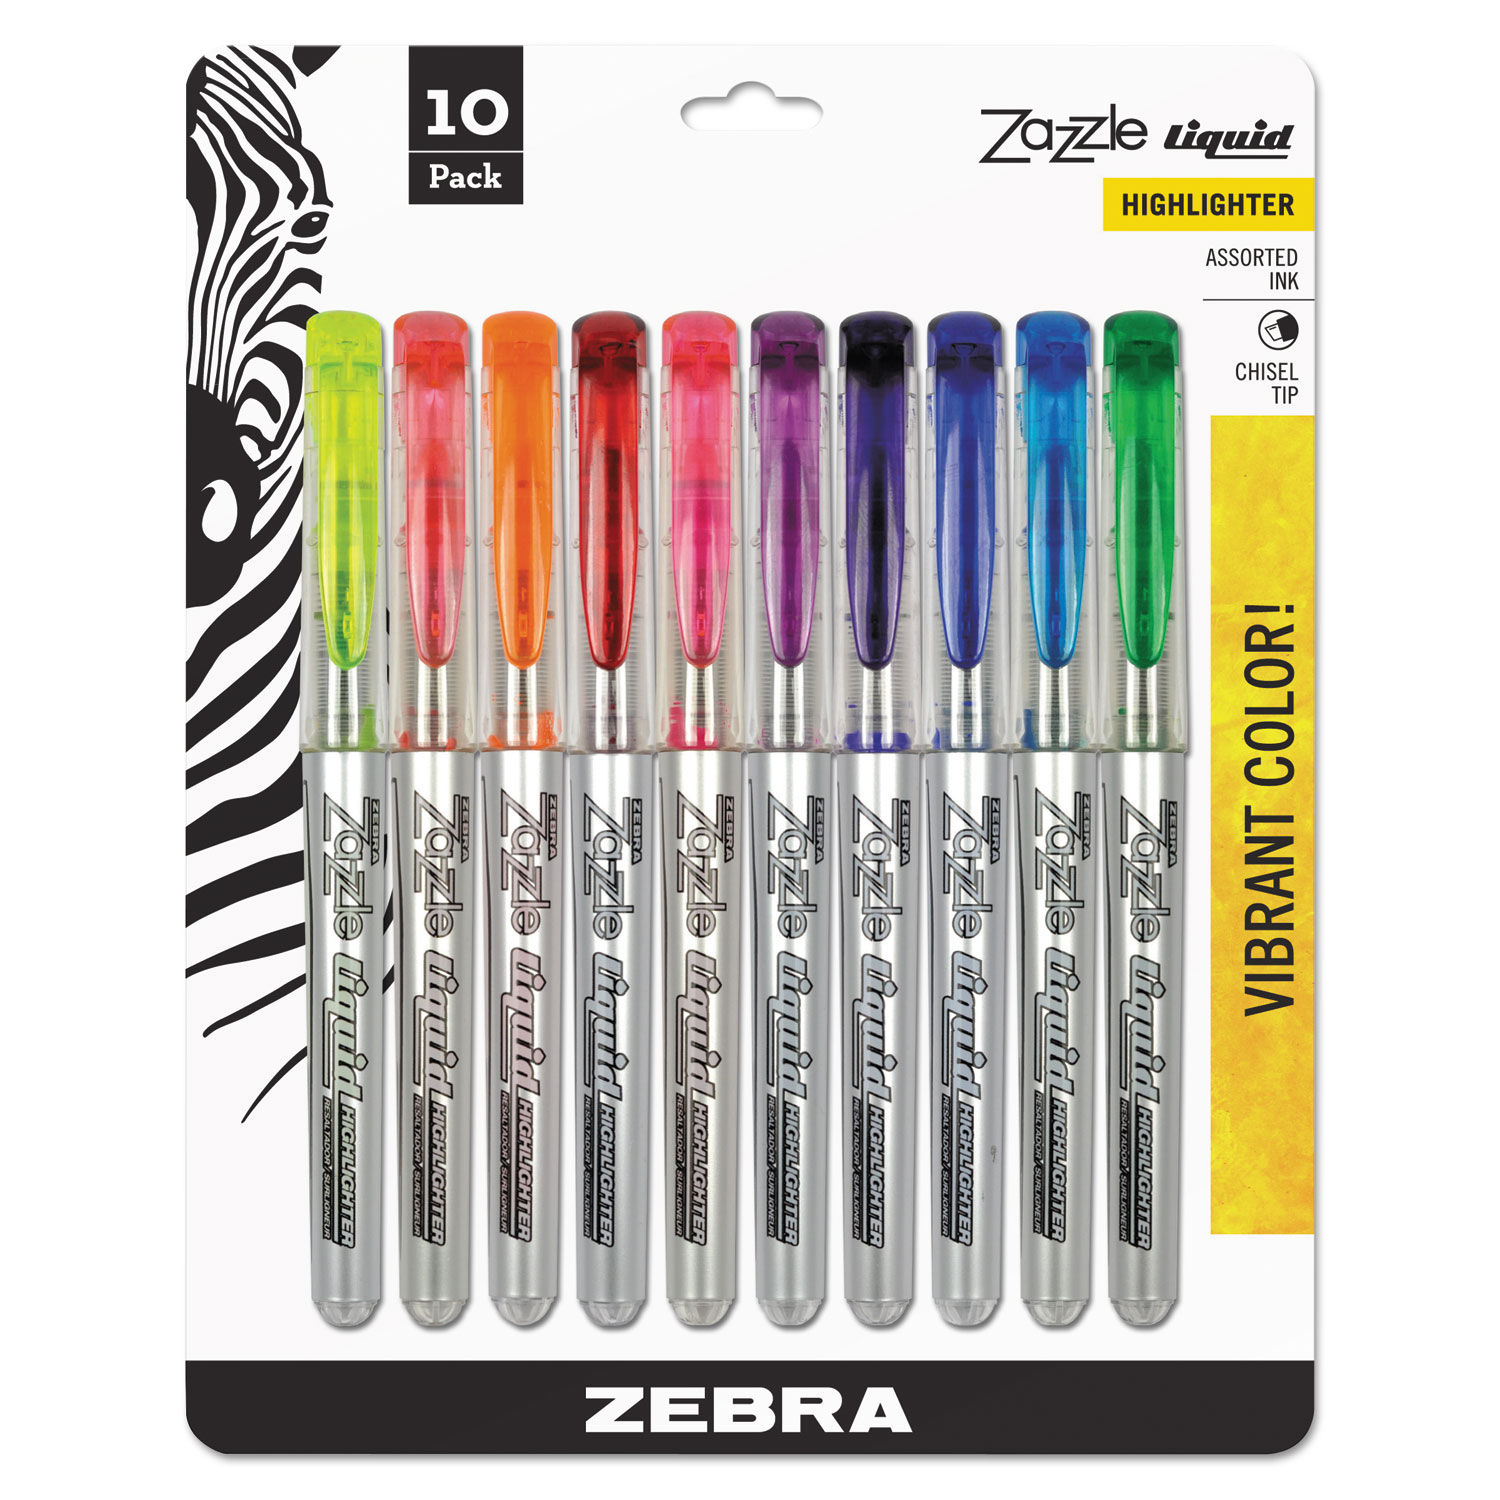 Zazzle Liquid Ink Highlighter Assorted Ink Colors, Chisel Tip, Assorted Barrel Colors, 10/Set